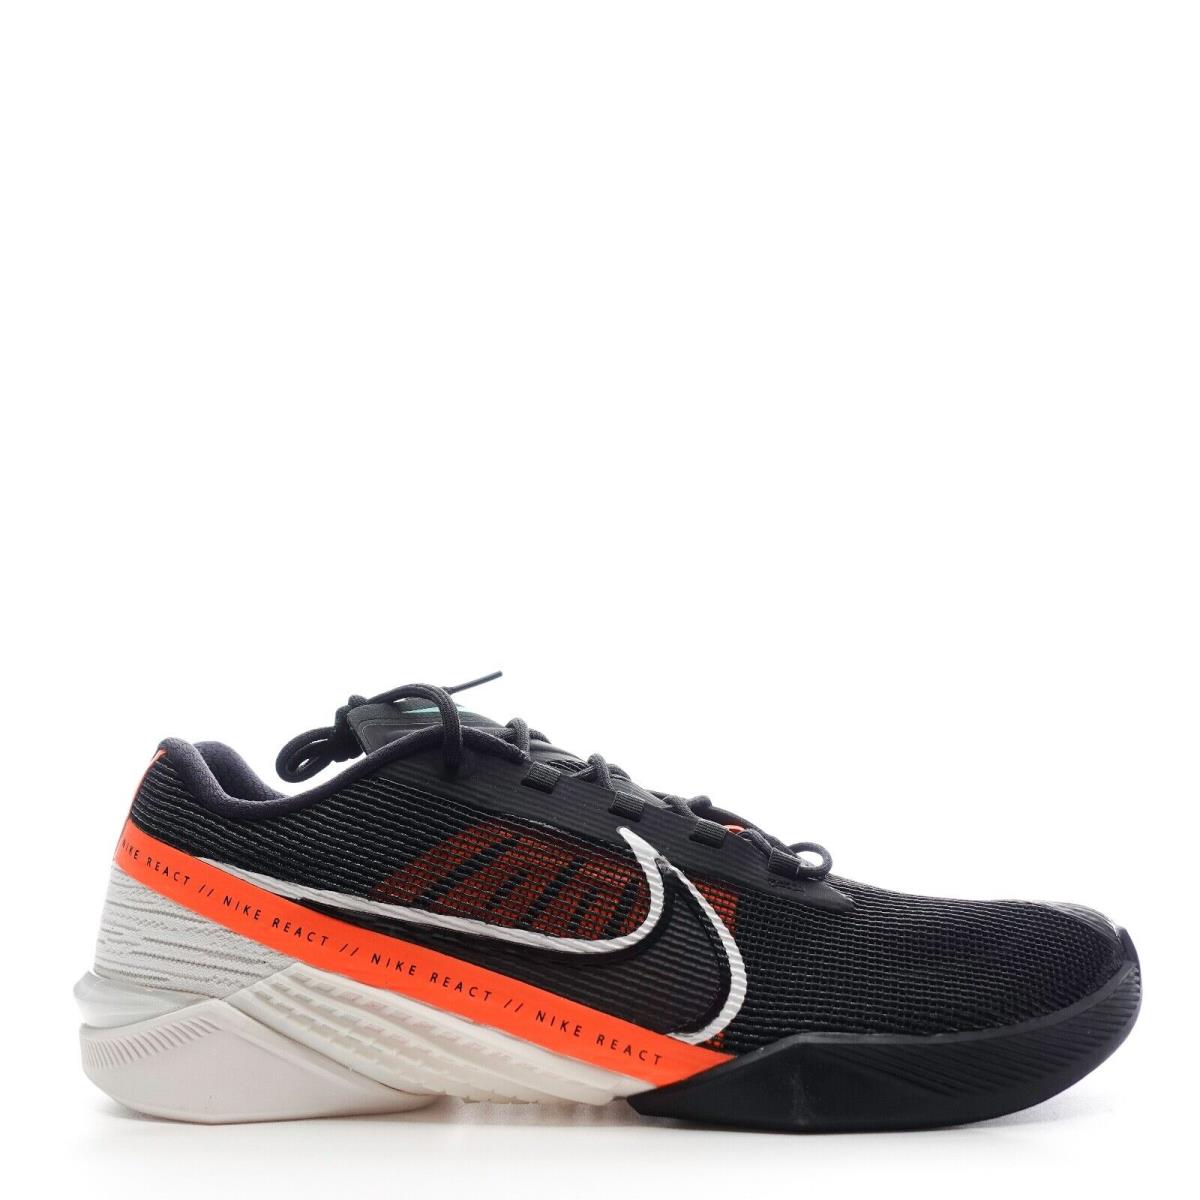 Nike React Metcon Turbo Black White Gym Training Shoes CT1243-083 Mens Size 12.5